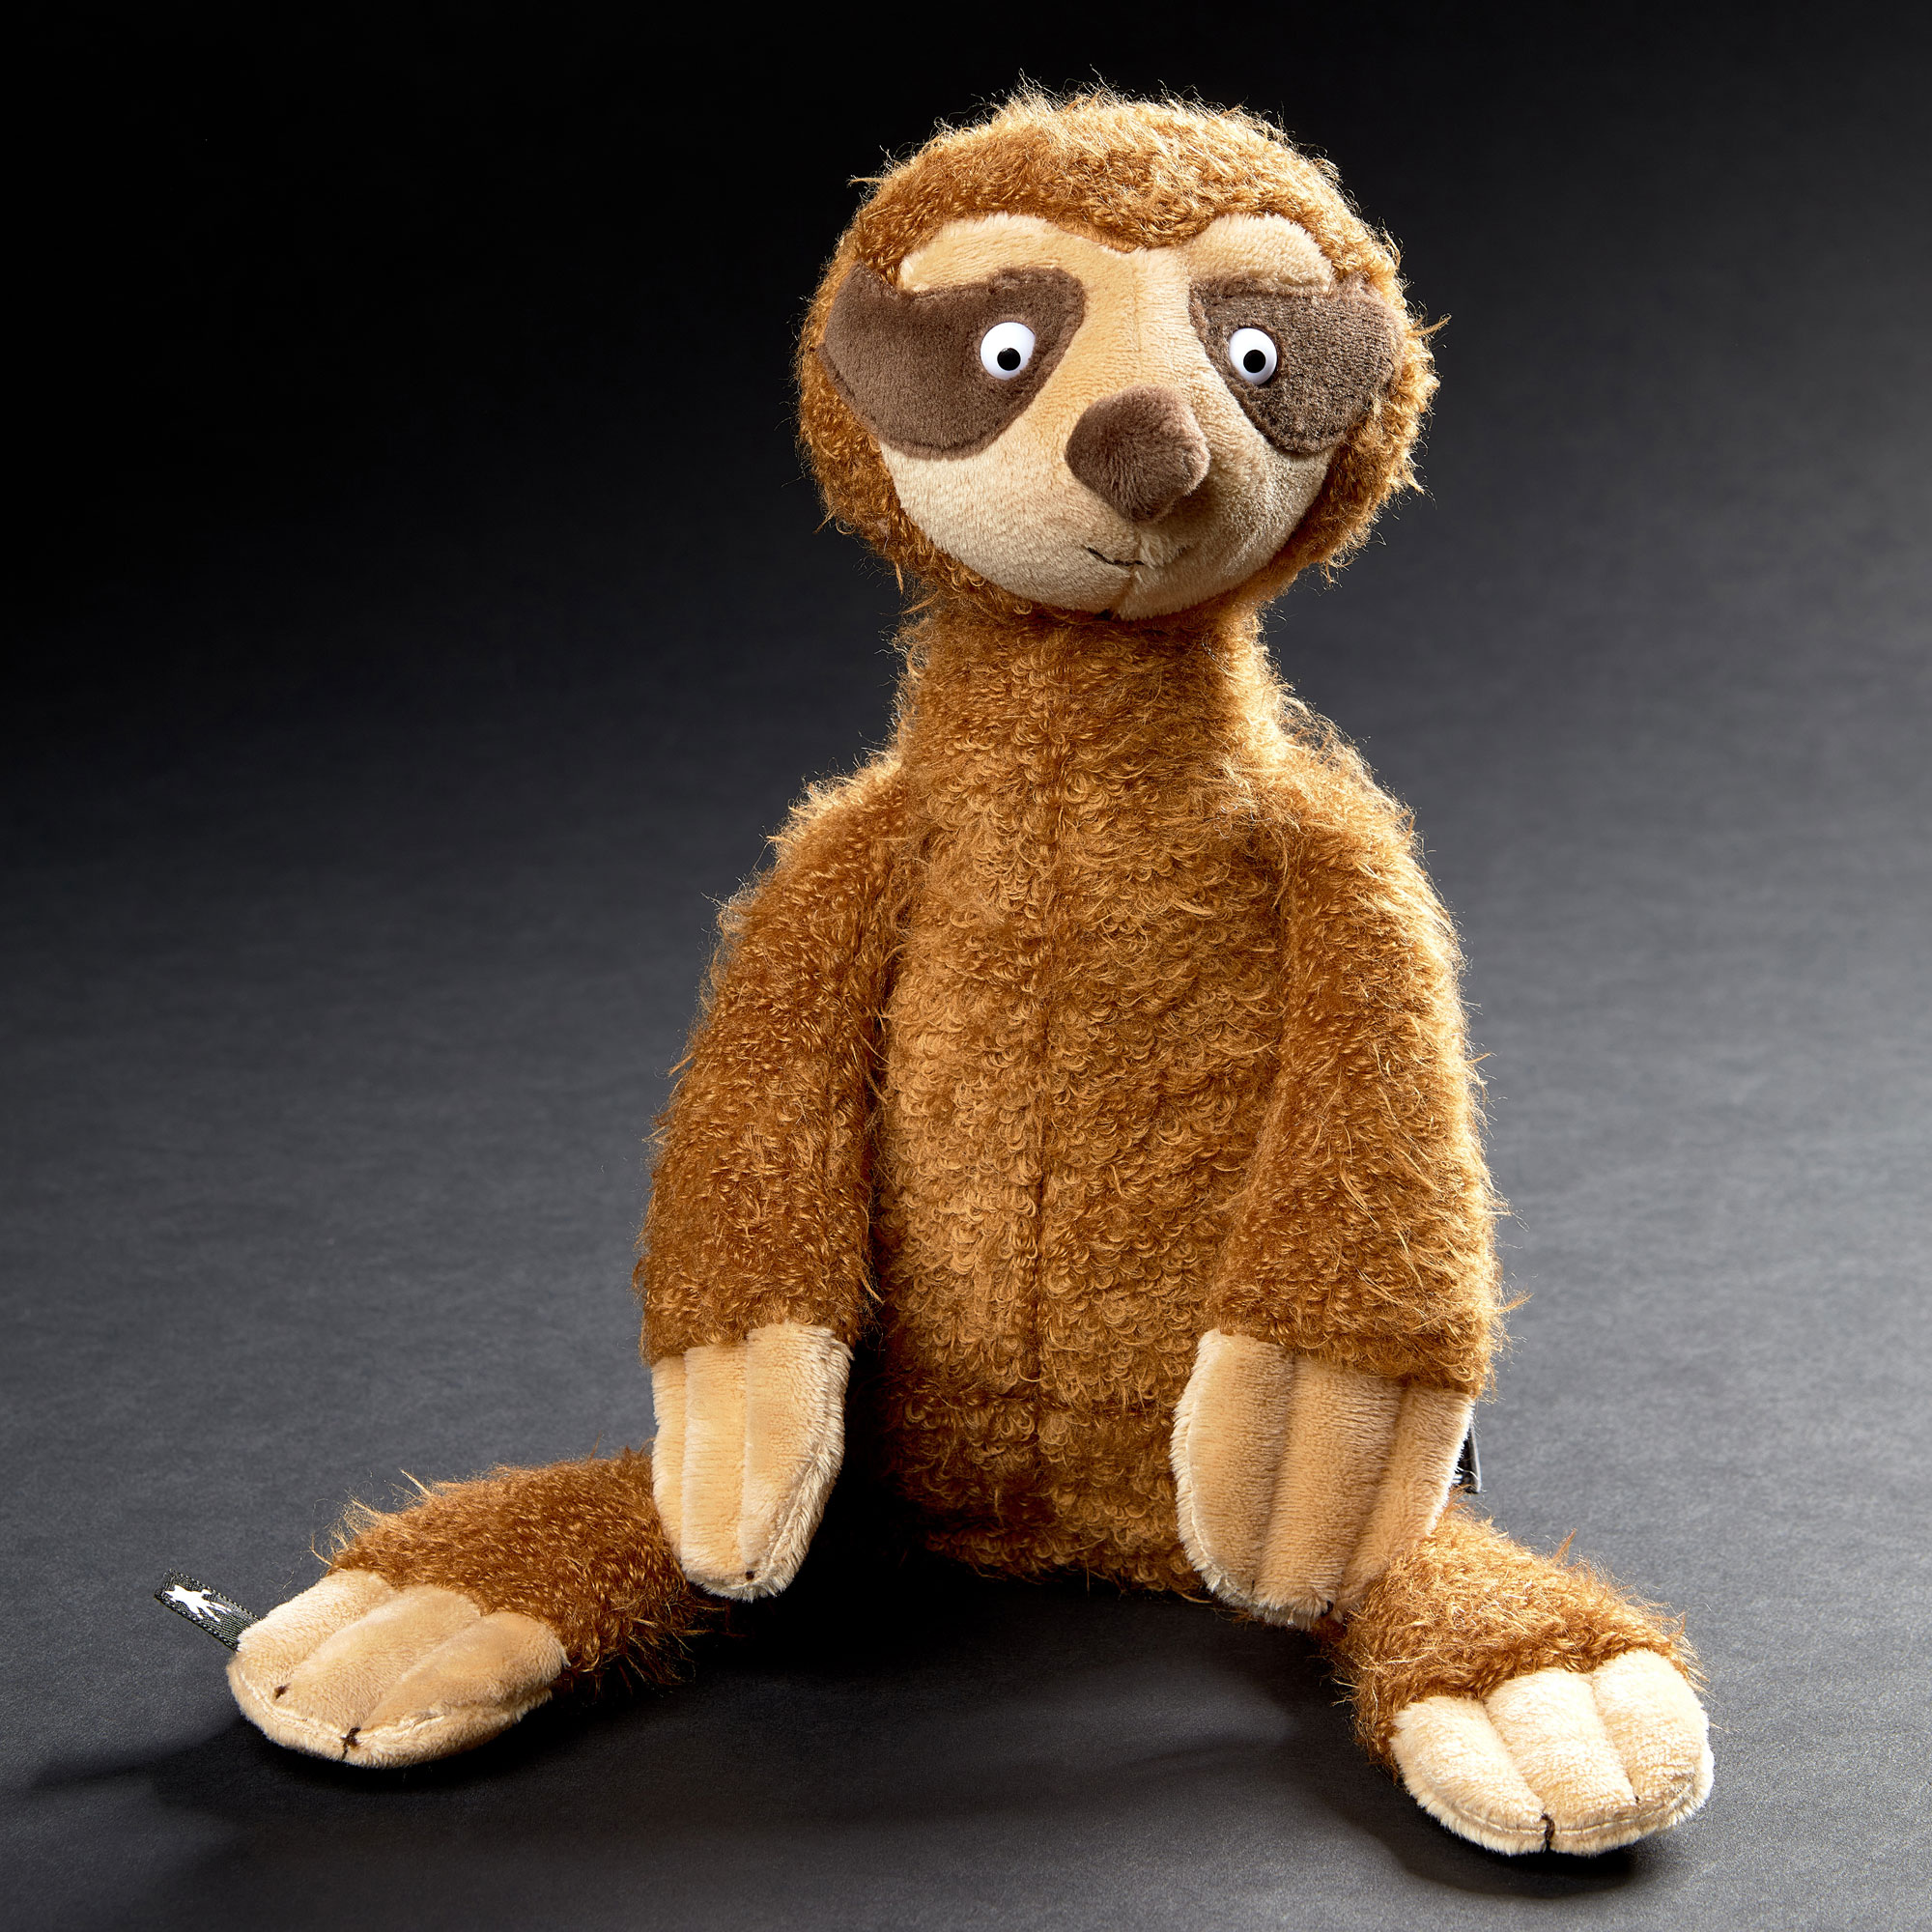 Plush toy sloth midi Ach Good! Beasts